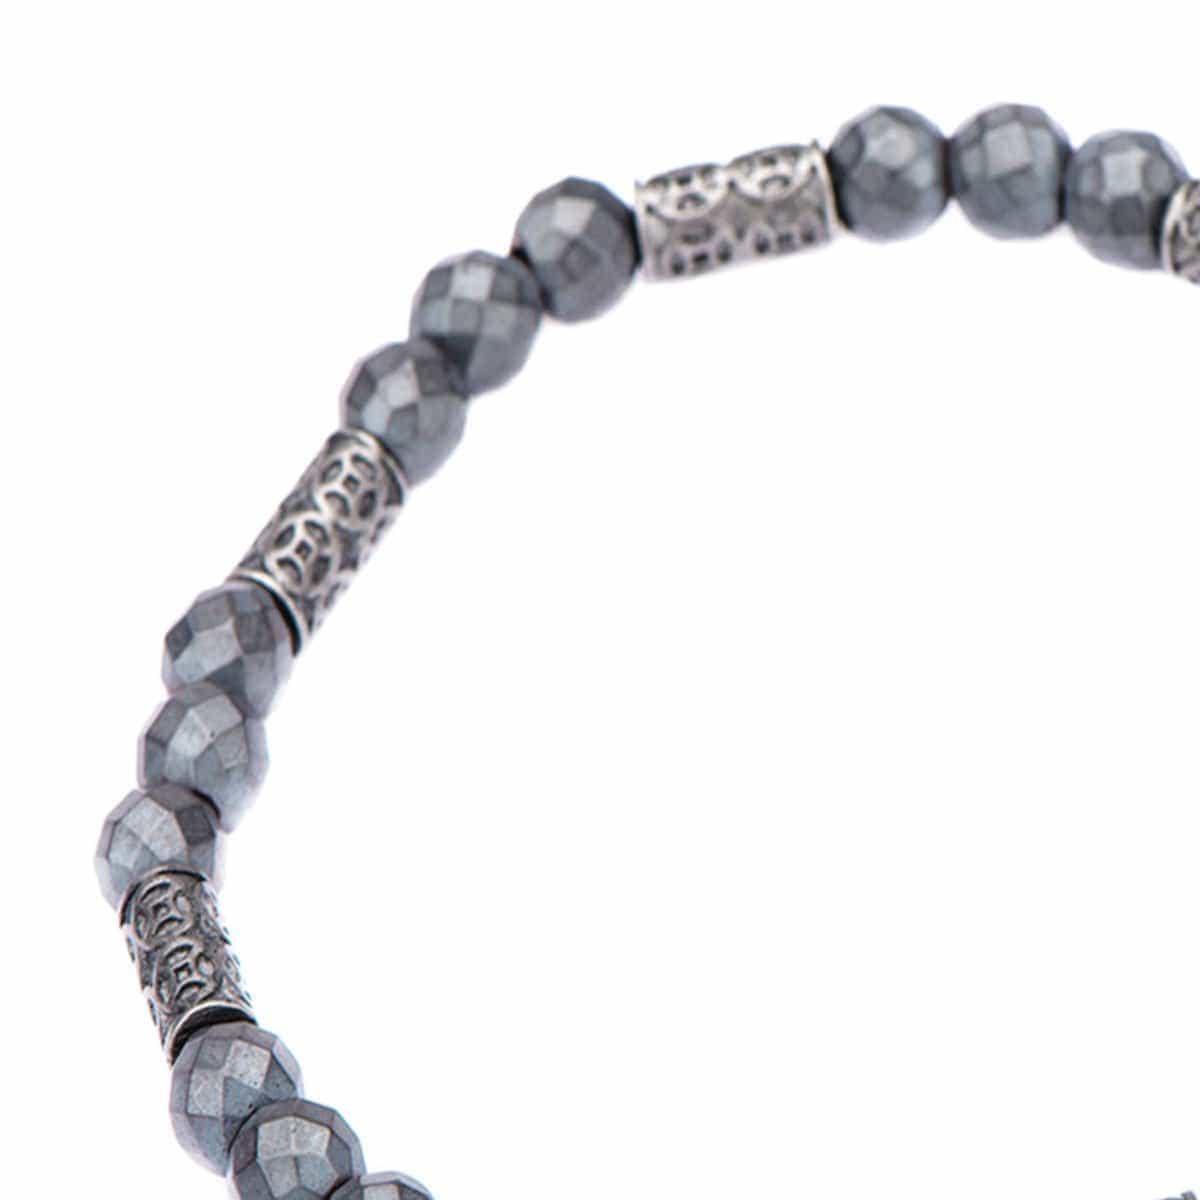 INOX JEWELRY Bracelets Silver Tone Stainless Steel with Gray Hematite Antique Bead Bracelet BR20171GRYHM